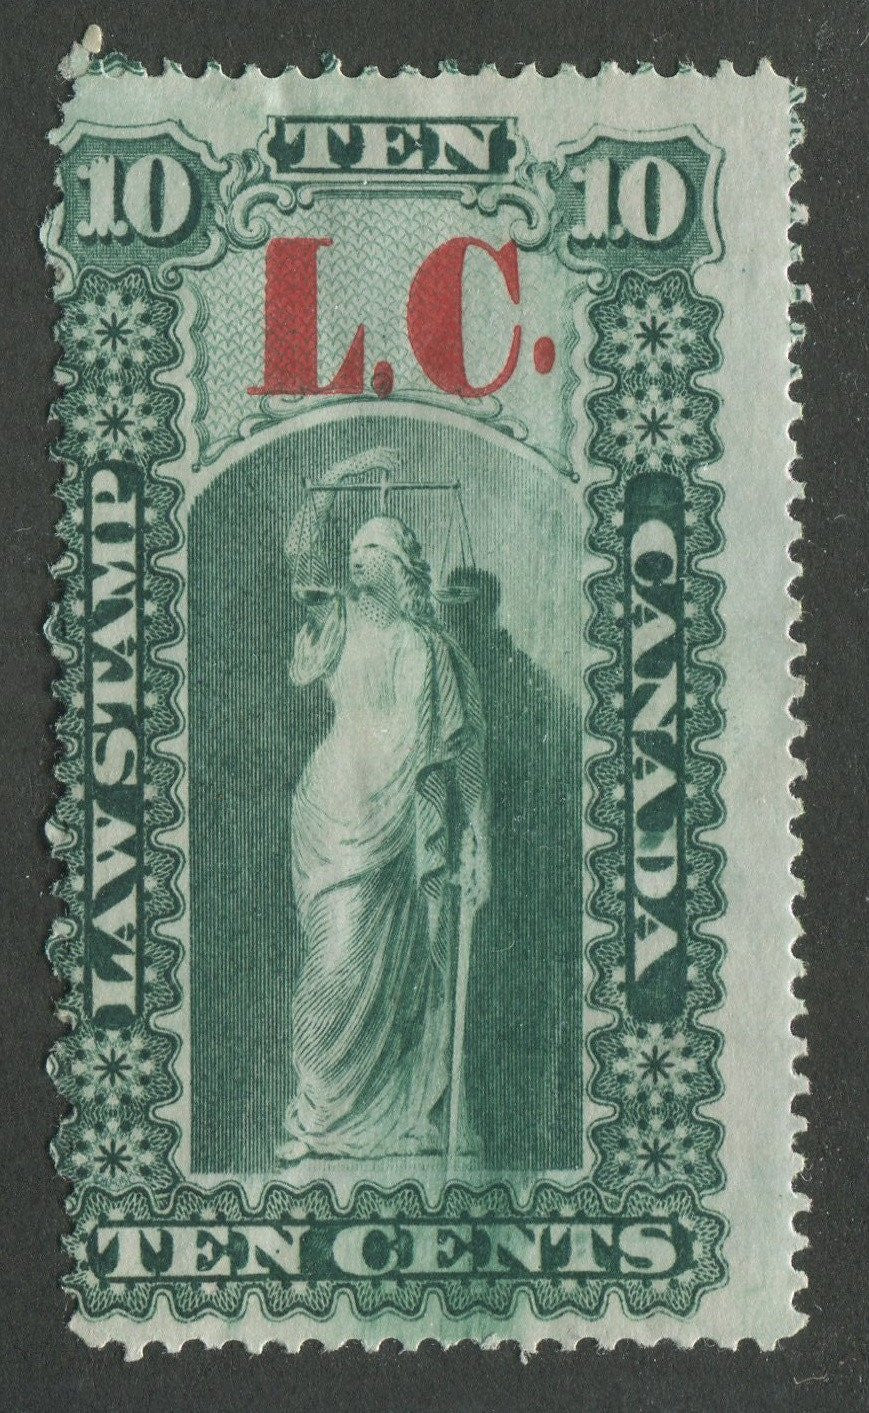 0002QL1707 - QL2 - Mint - UNLISTED - Deveney Stamps Ltd. Canadian Stamps